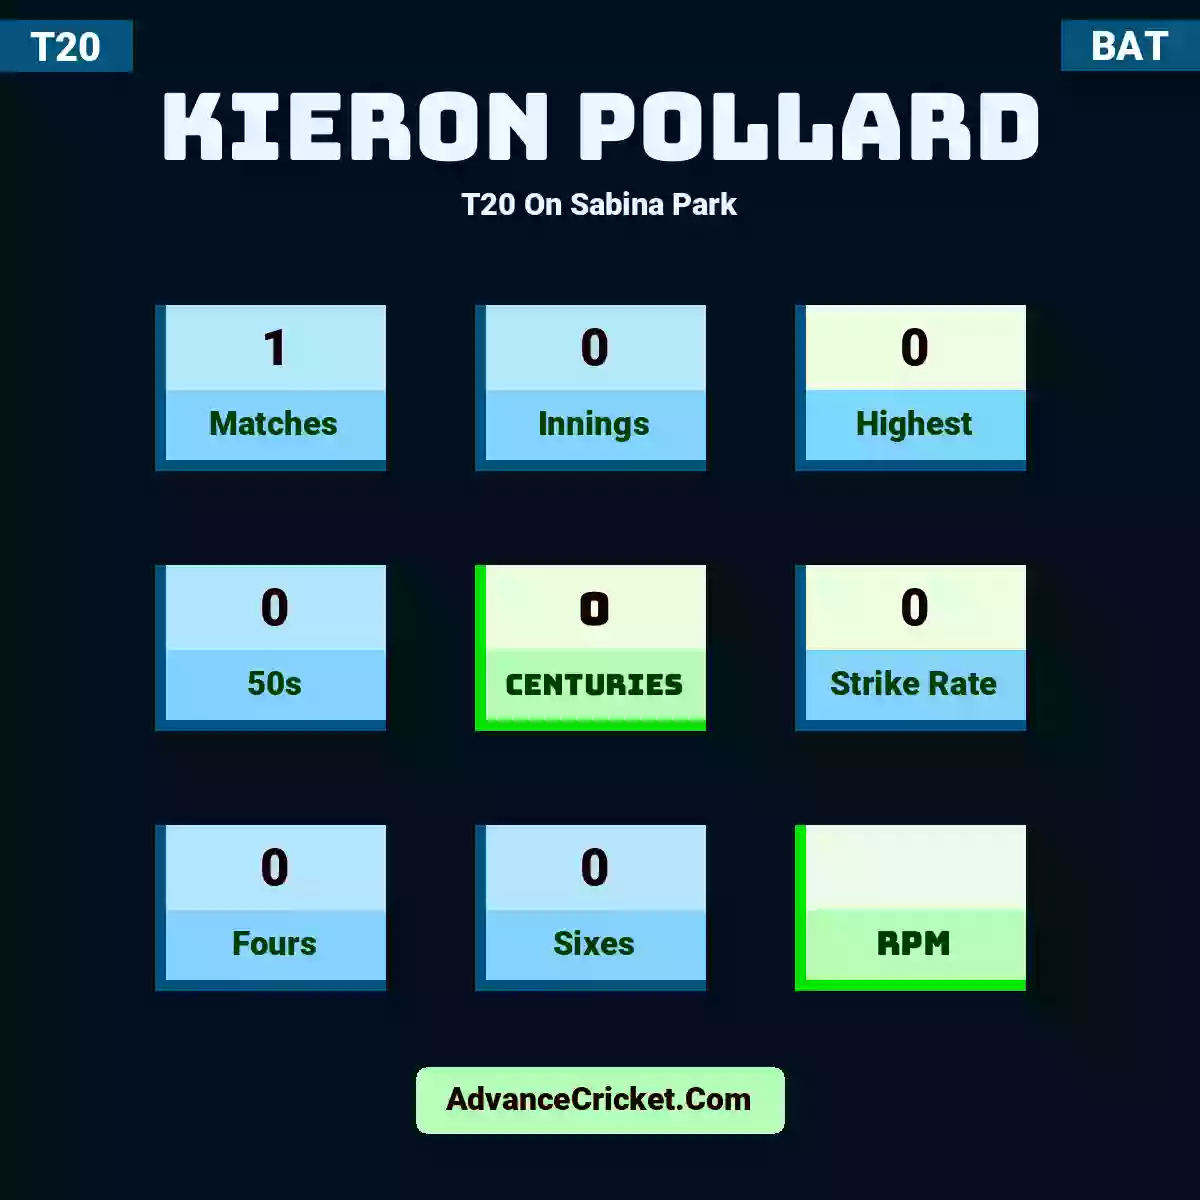 Kieron Pollard T20  On Sabina Park, Kieron Pollard played 1 matches, scored 0 runs as highest, 0 half-centuries, and 0 centuries, with a strike rate of 0. K.Pollard hit 0 fours and 0 sixes.